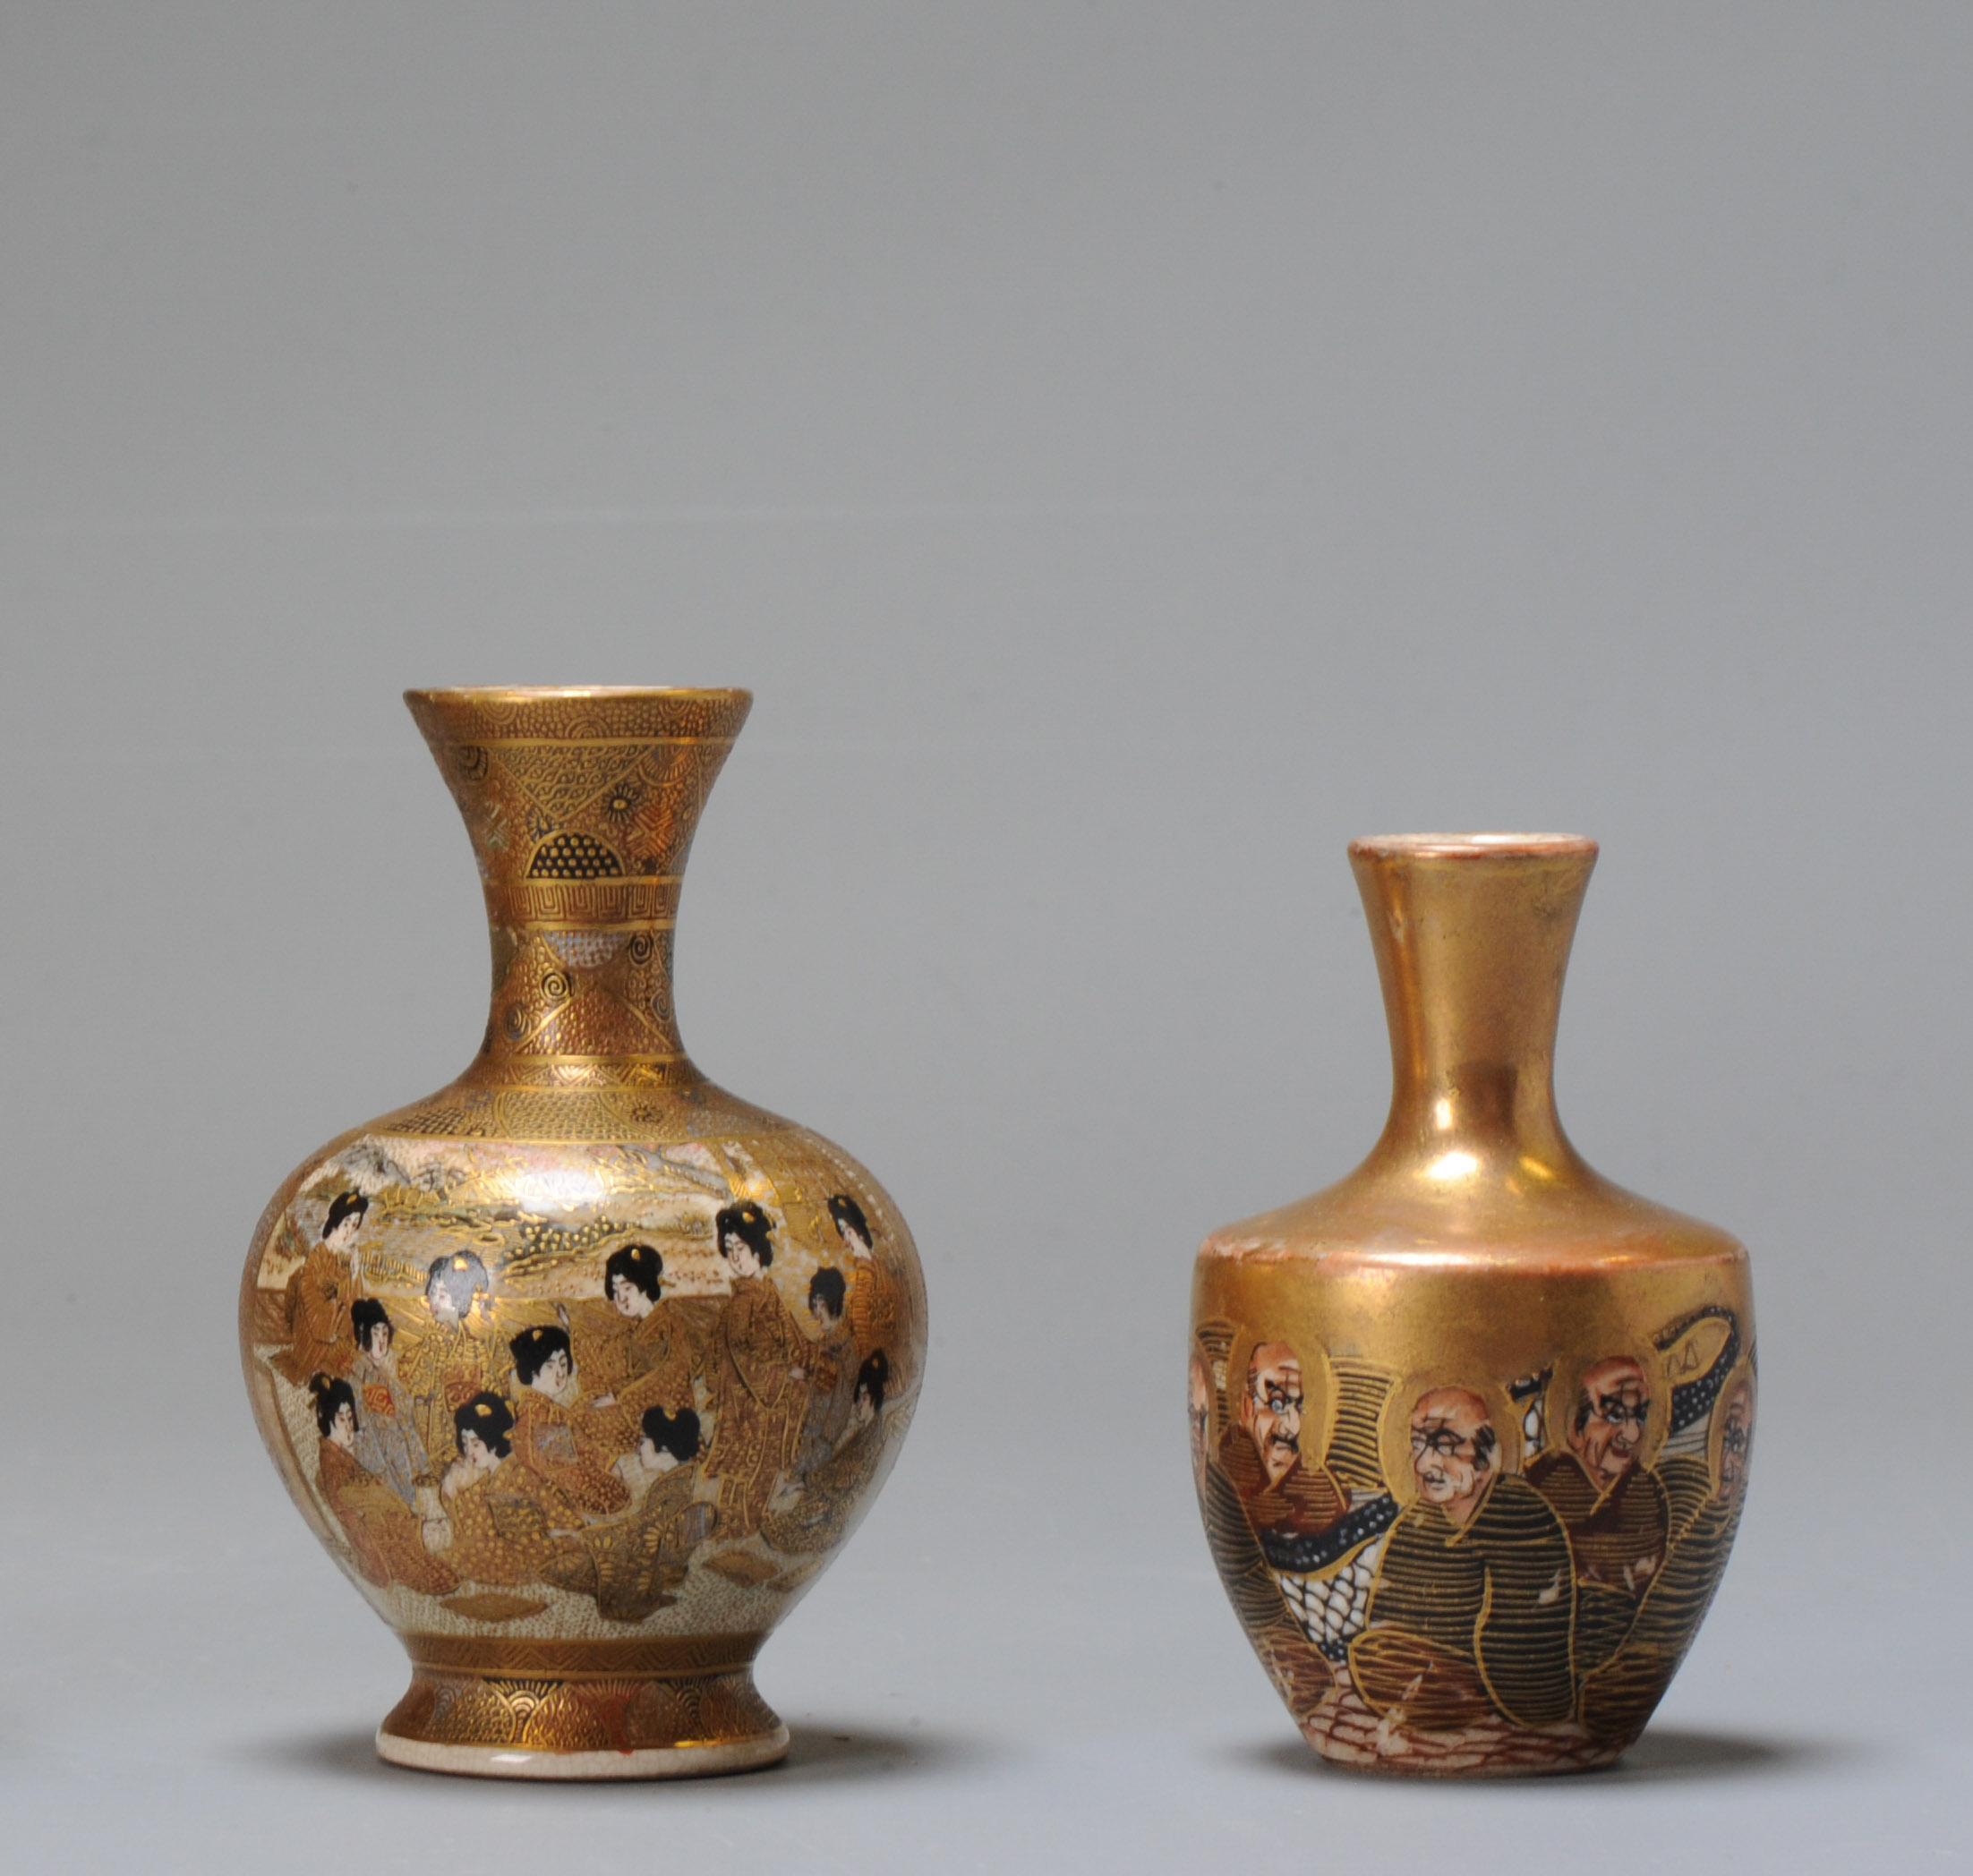 #2 Antique Meiji period Japanese Satsuma vases with mark Japan 19c